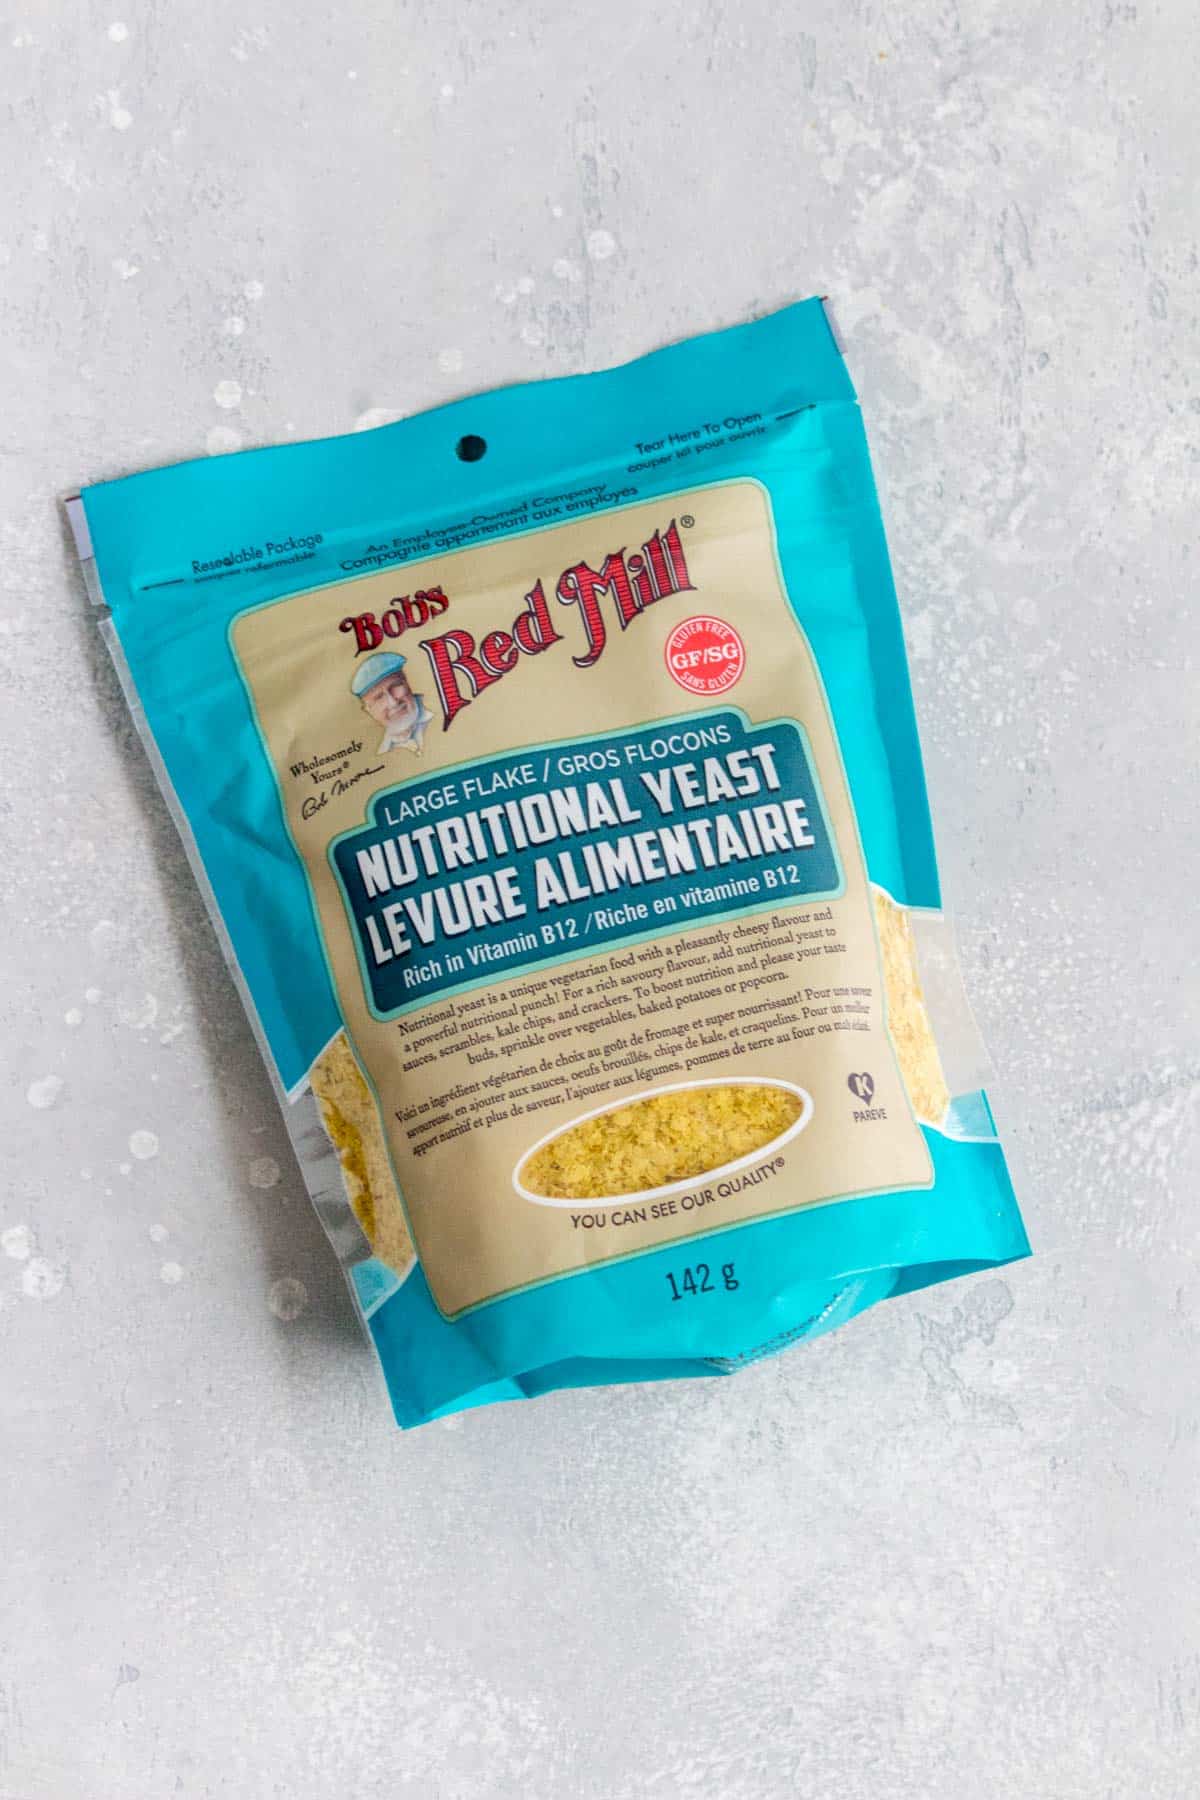 Bag of nutritional yeast.